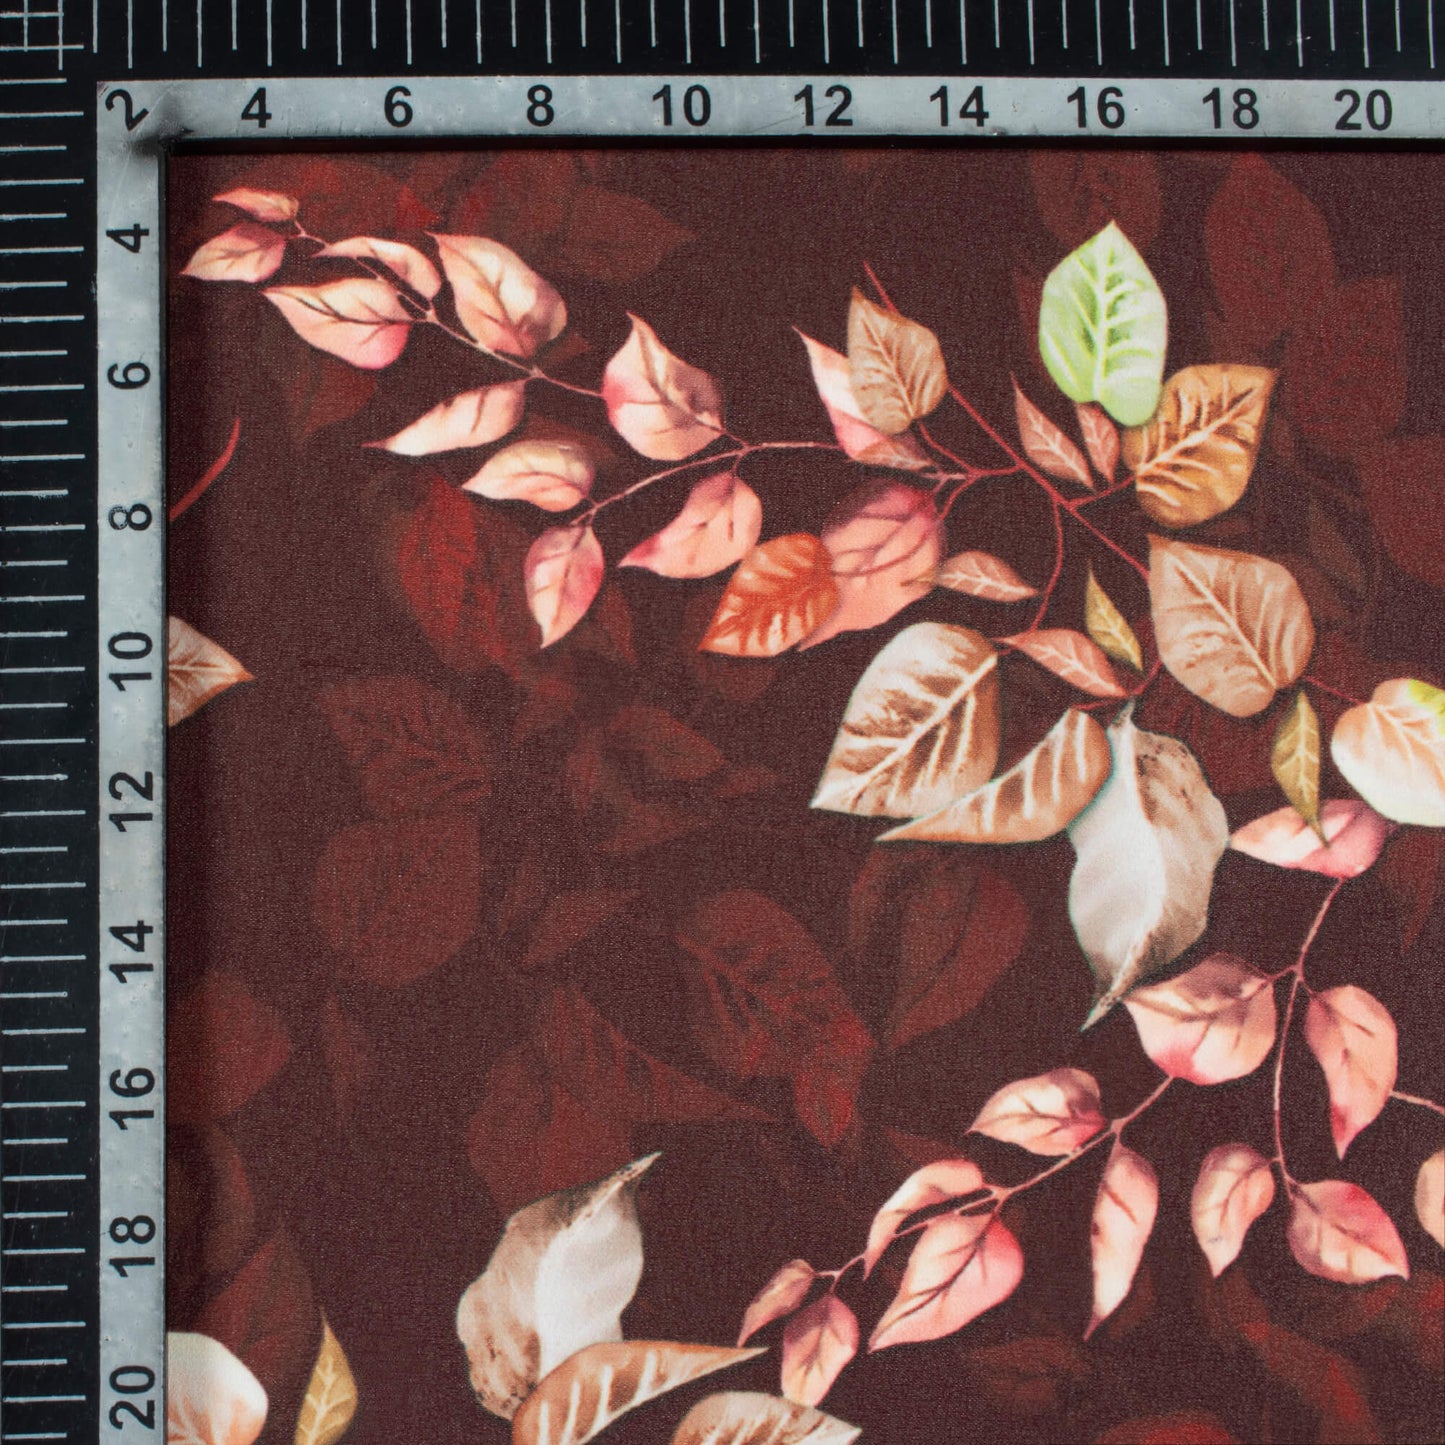 Hickory Brown And Brick Pink Leaf Pattern Digital Print Georgette Fabric